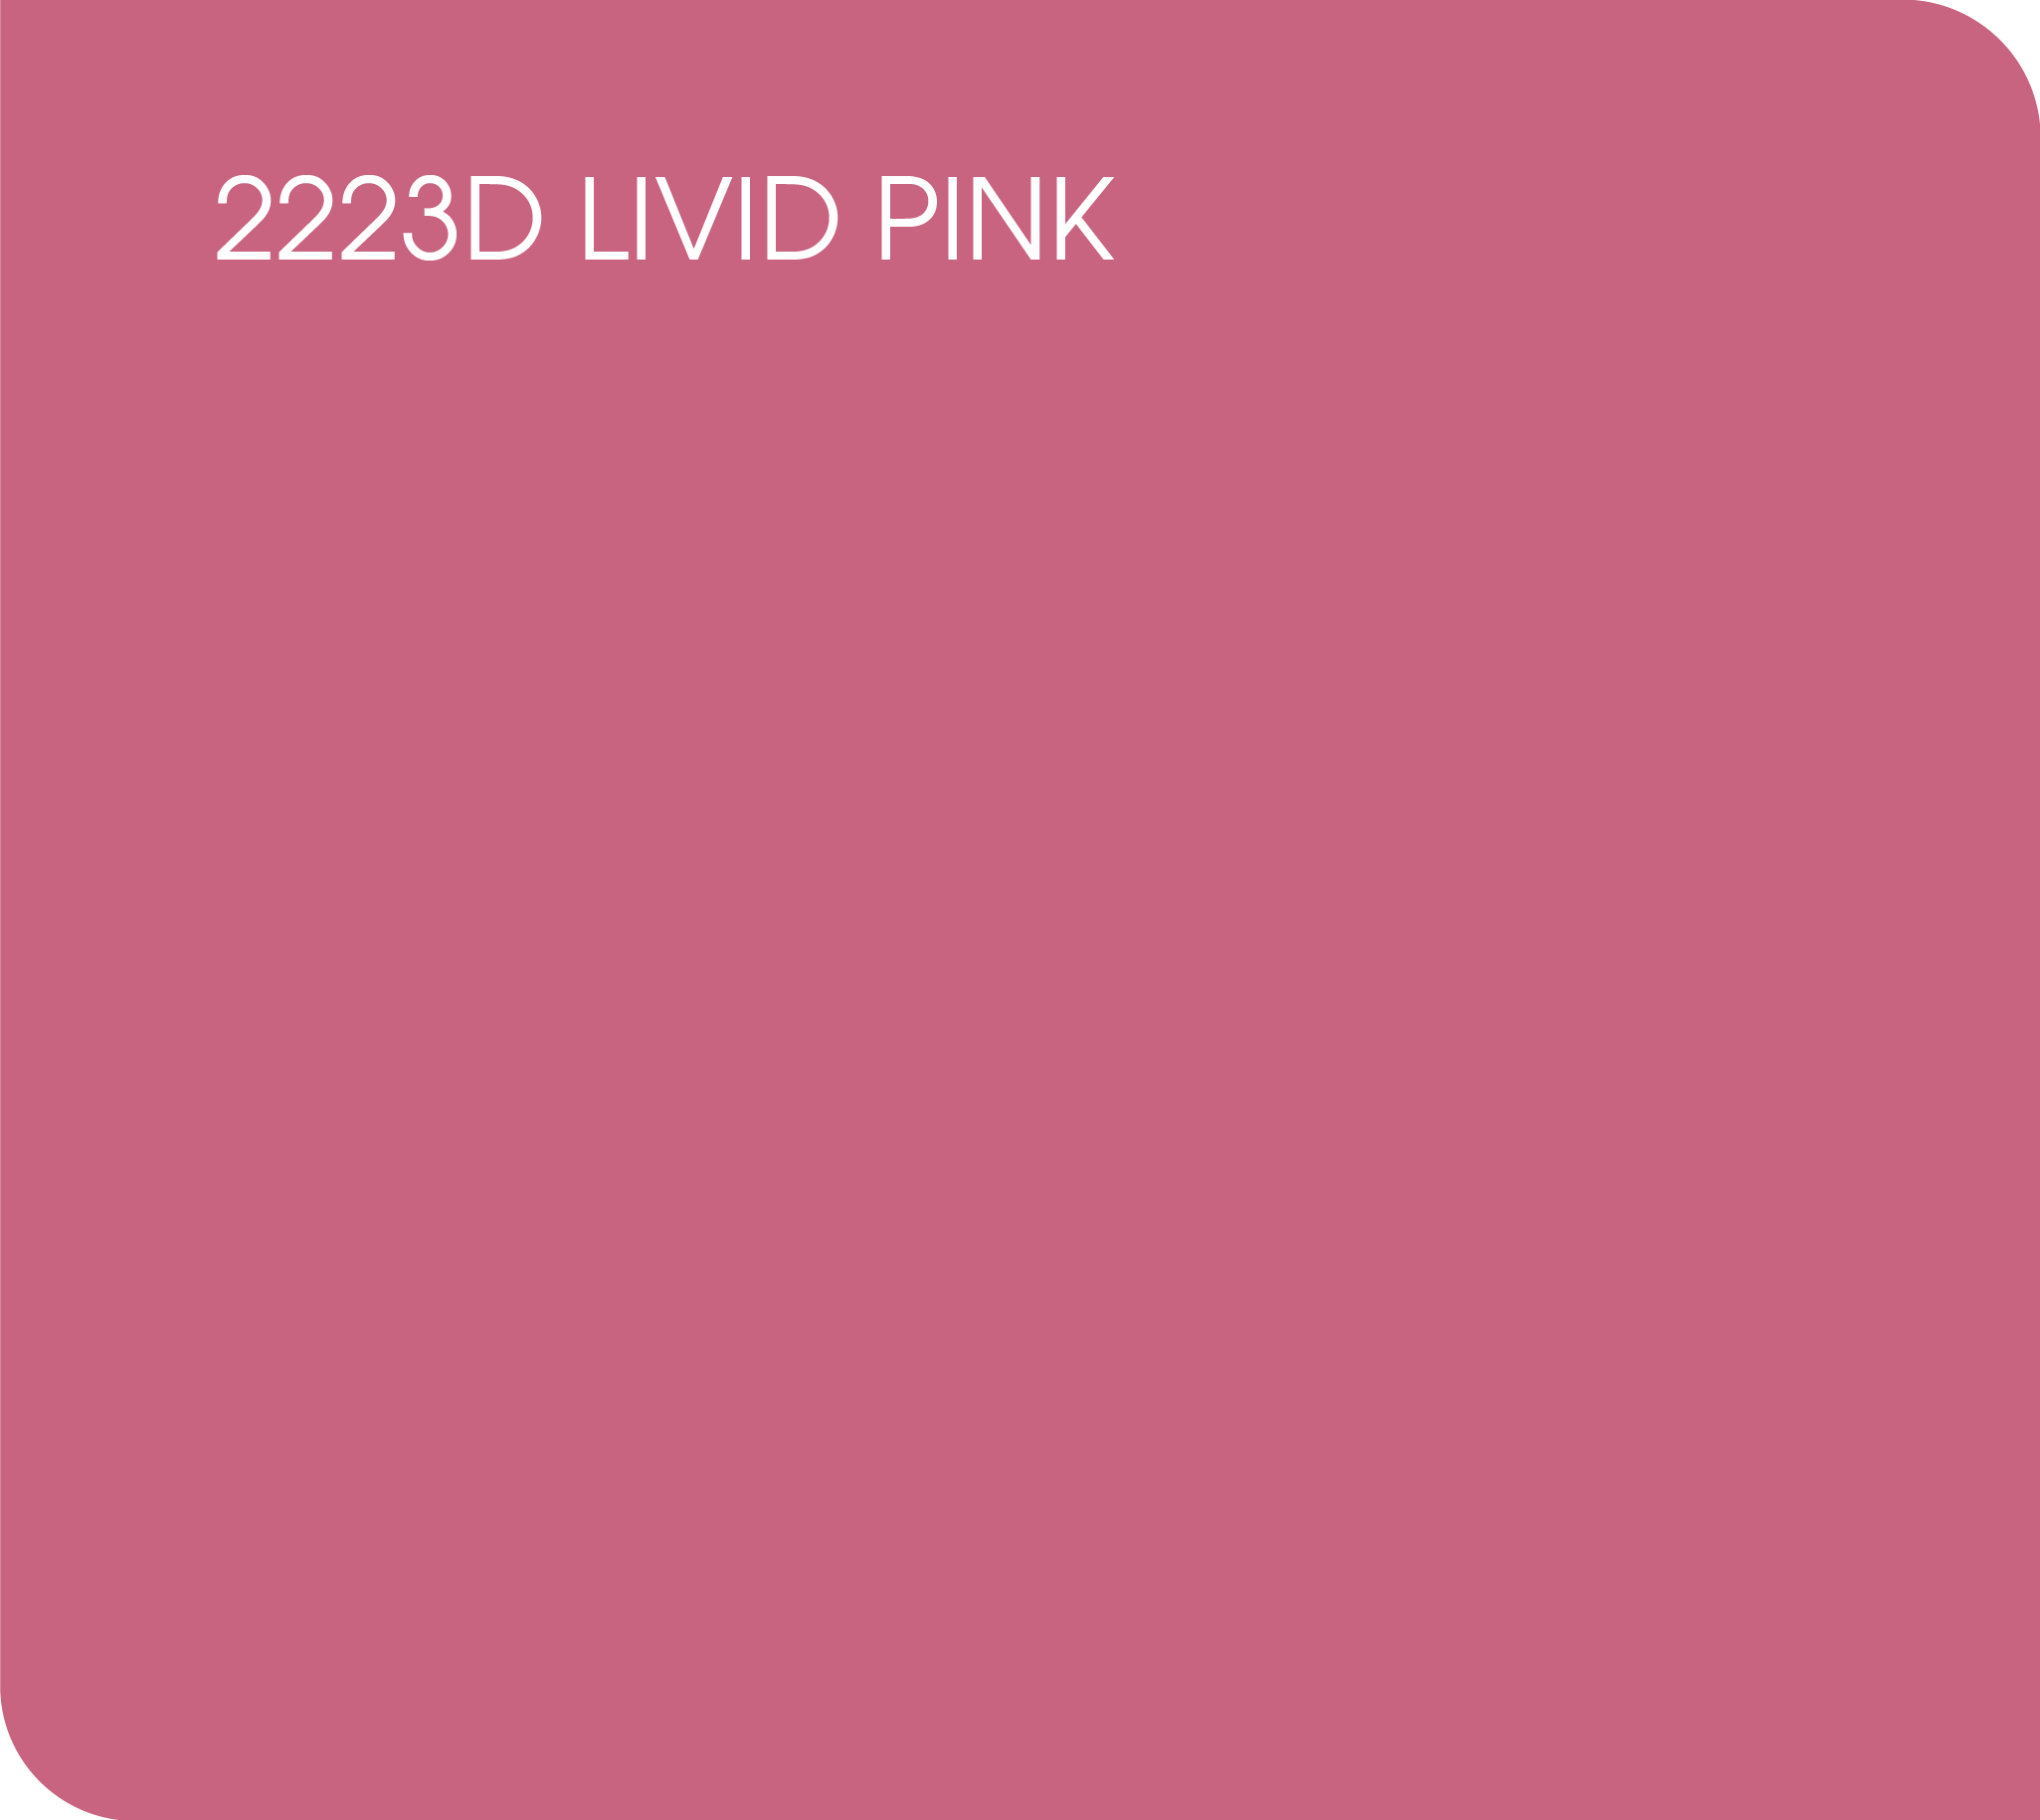 Livid Pink